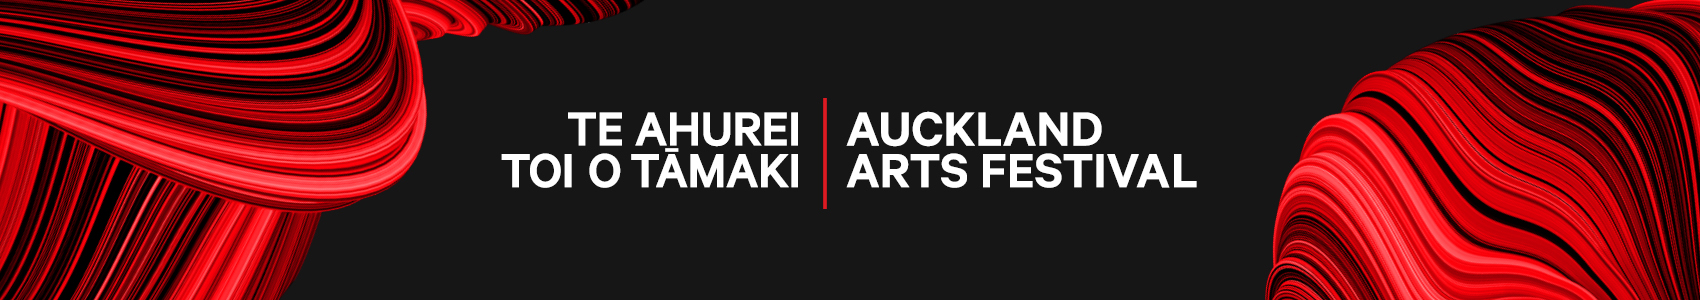 Te Ahurei Toi o Tāmaki / Auckland Arts Festival 